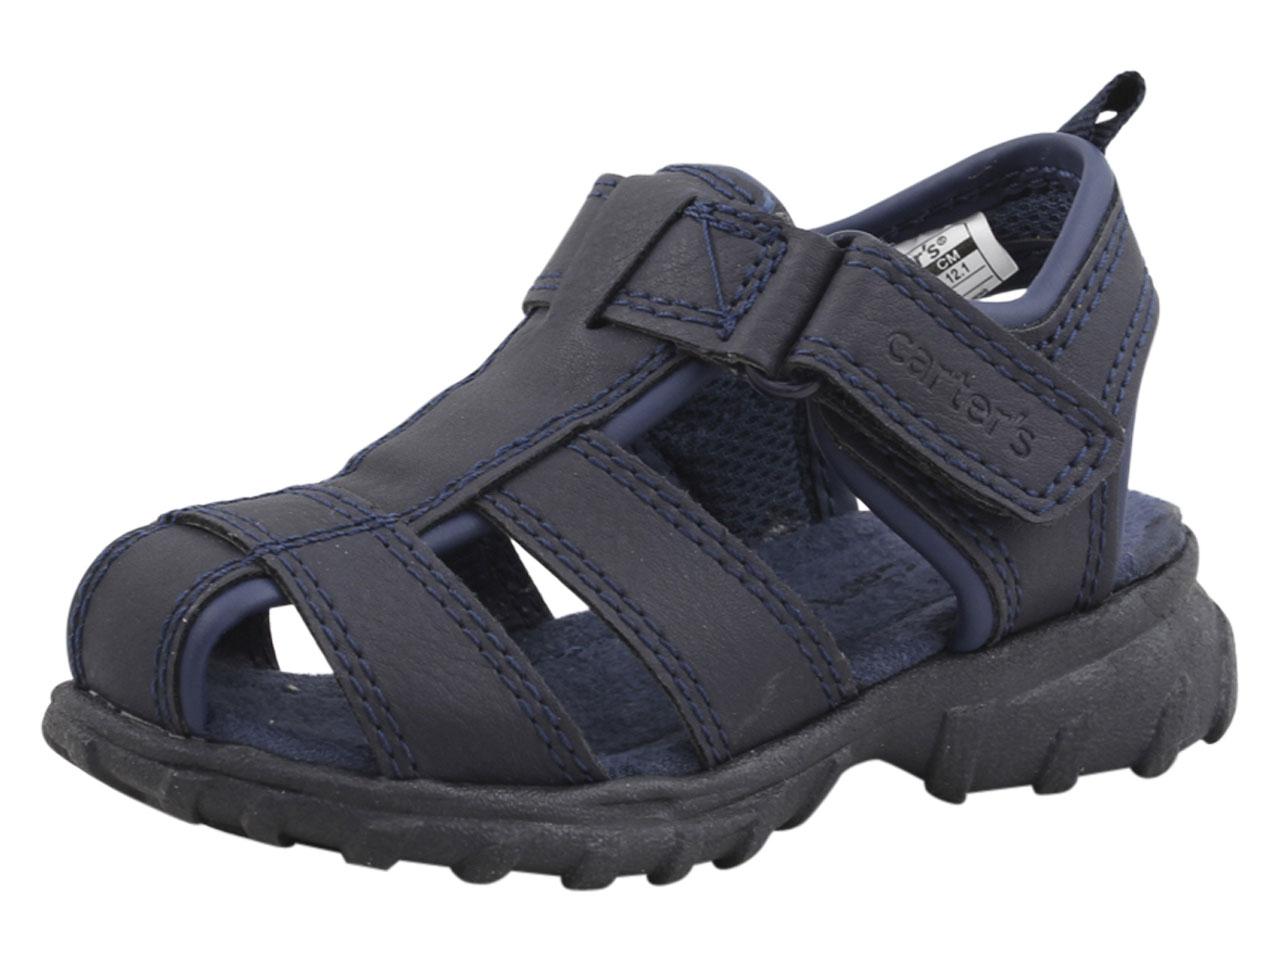 Toddler/Little Boy's  Fisherman Sandals Shoes - Blue - 10 M US Toddler - Carter's Xtreme